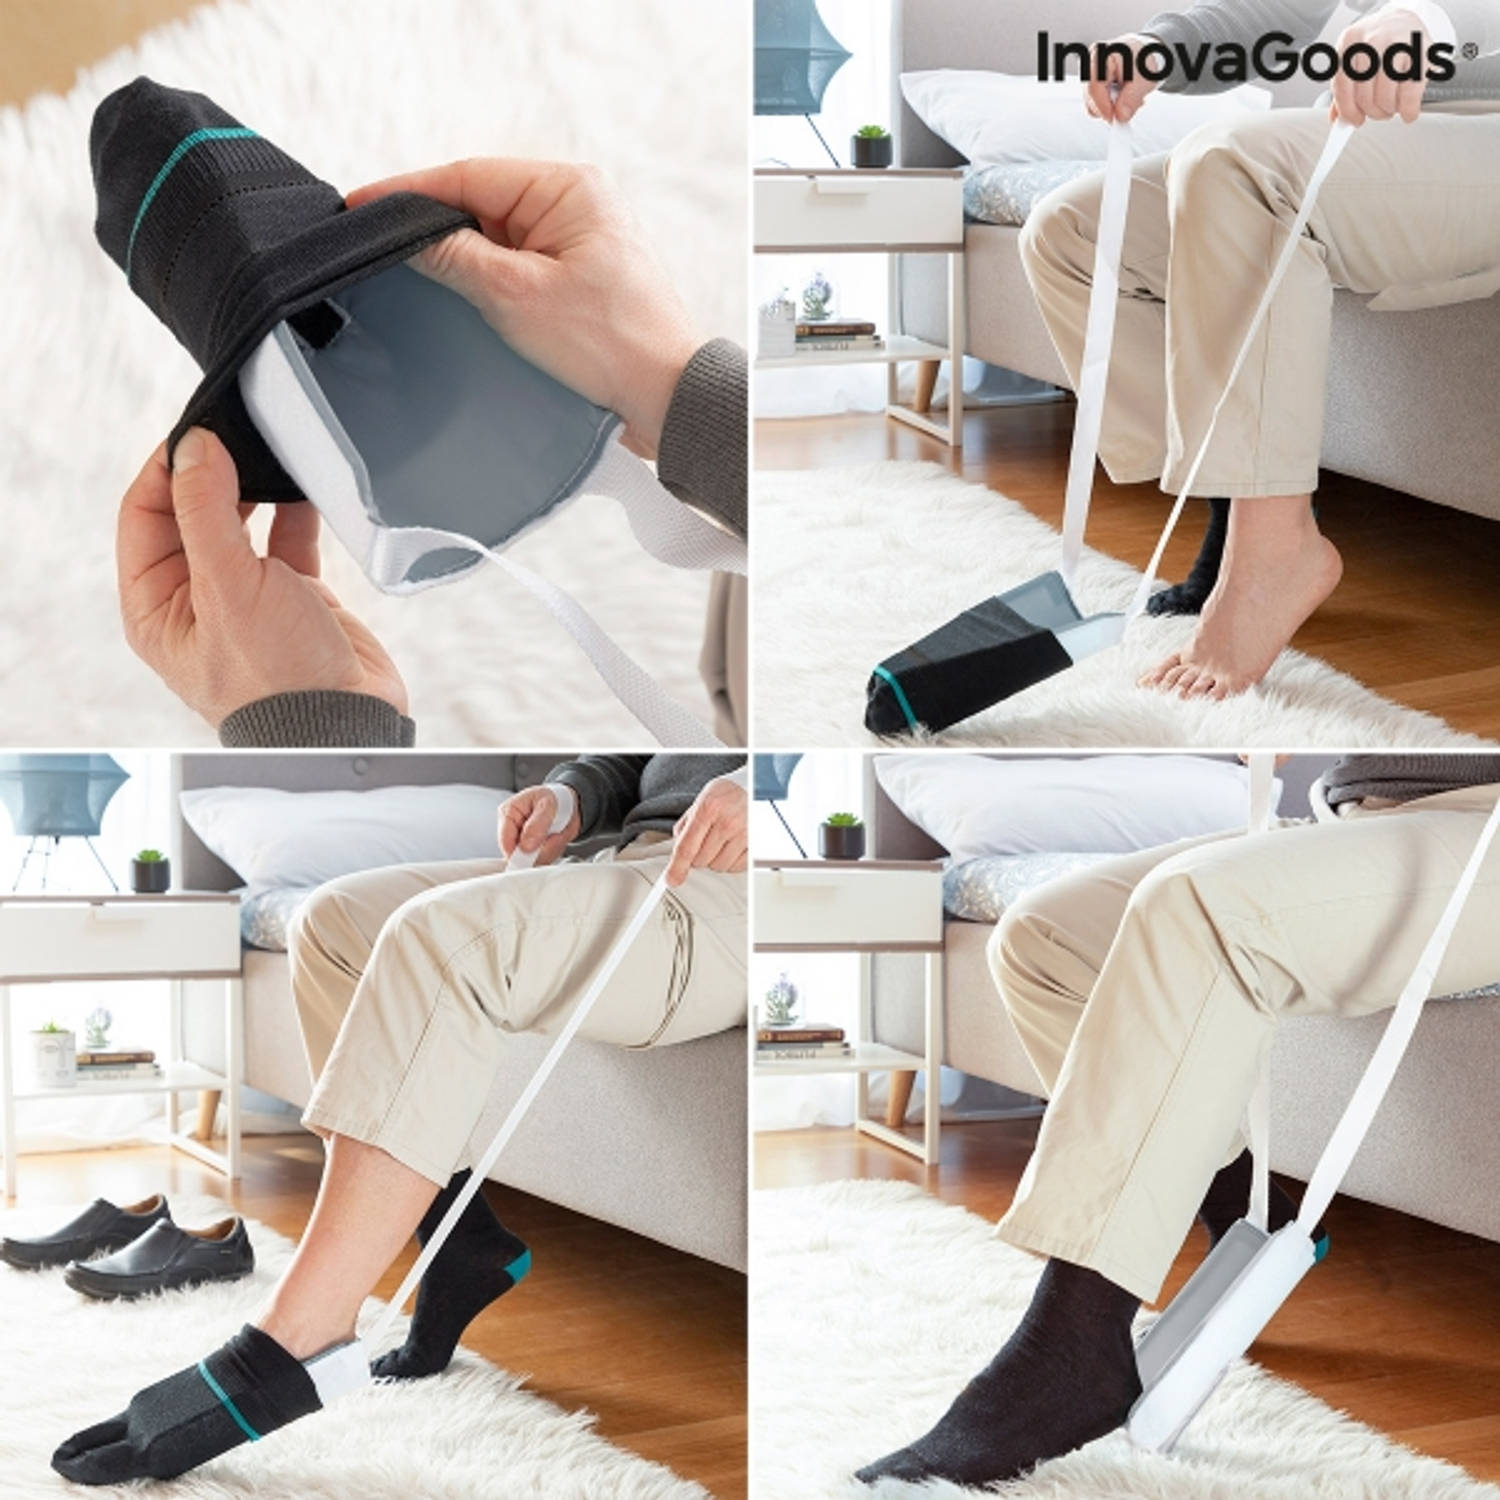 Sokaantrekker Sok Kousen Aantrekhulp gemakkelijk sokken aantrekken Sokken Aantrekken | Blokker